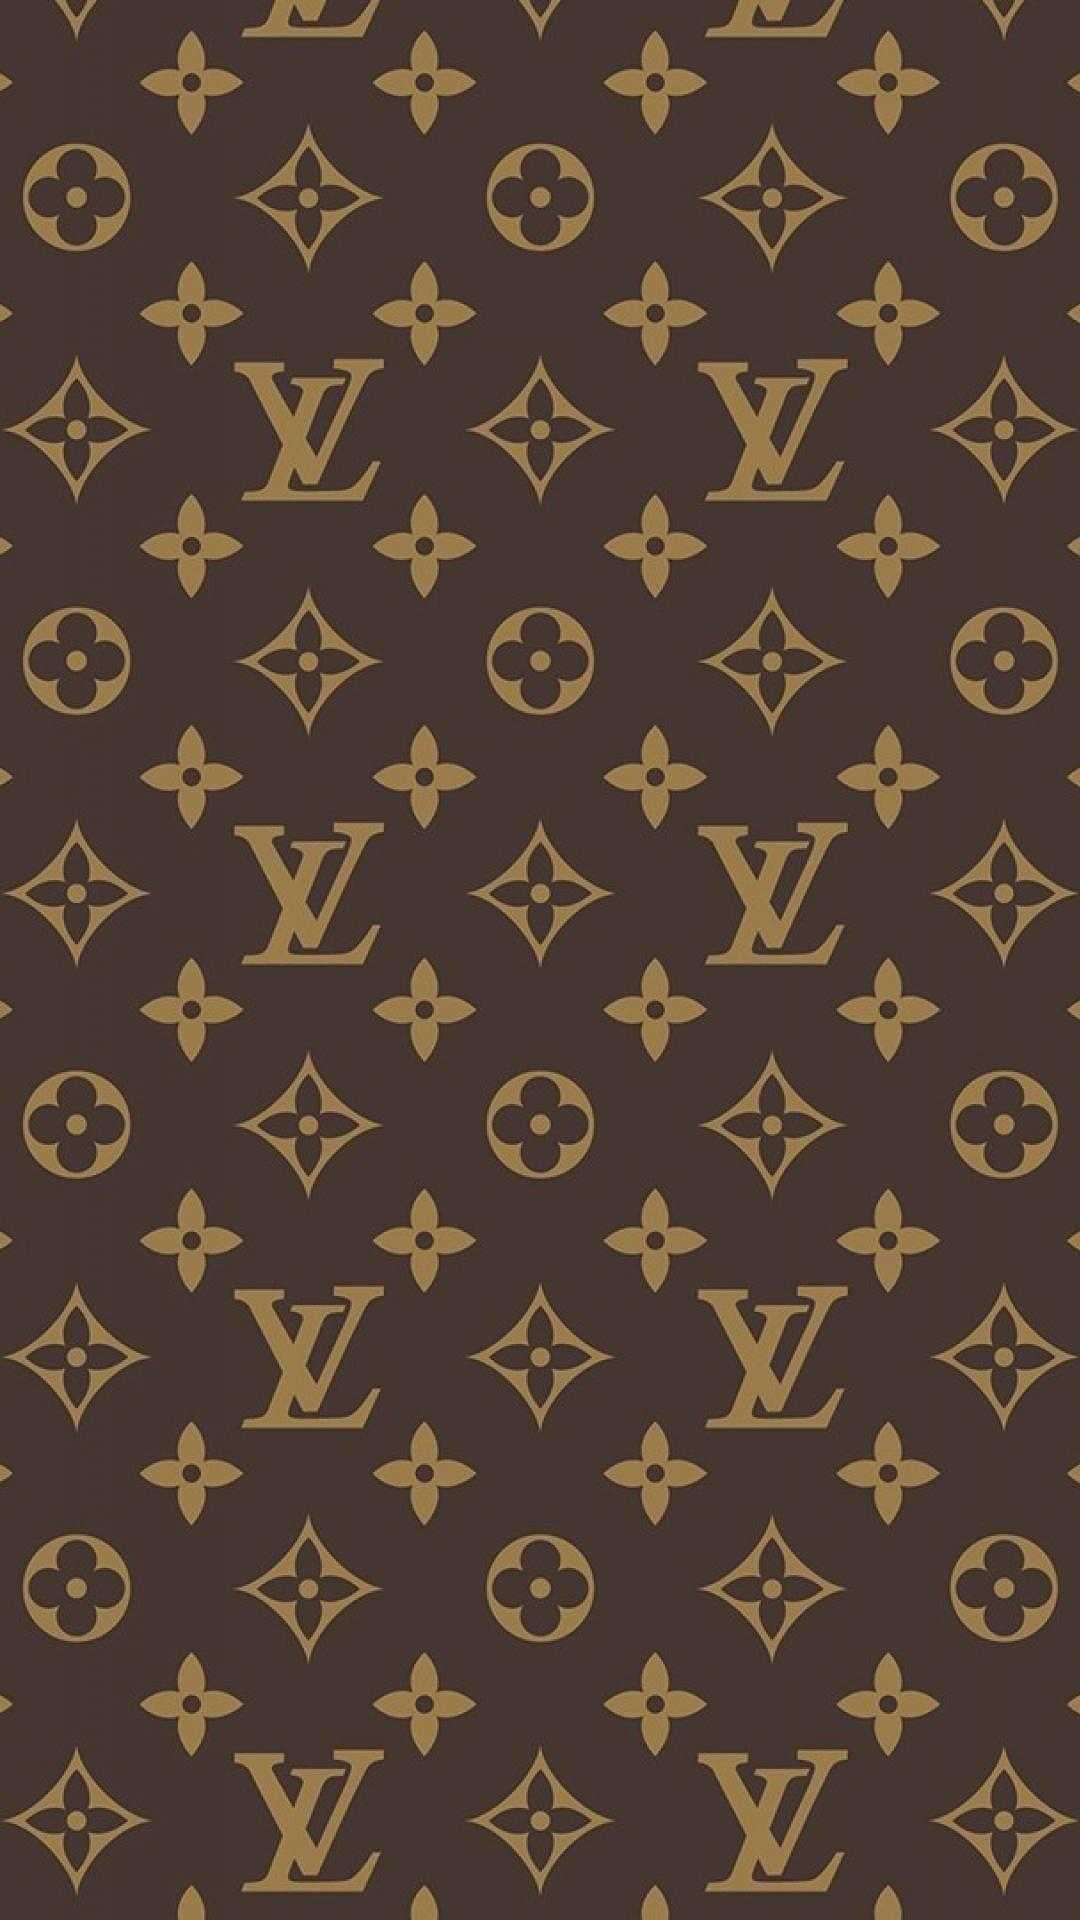 Louis Vuitton Background Wallpaper - EnWallpaper